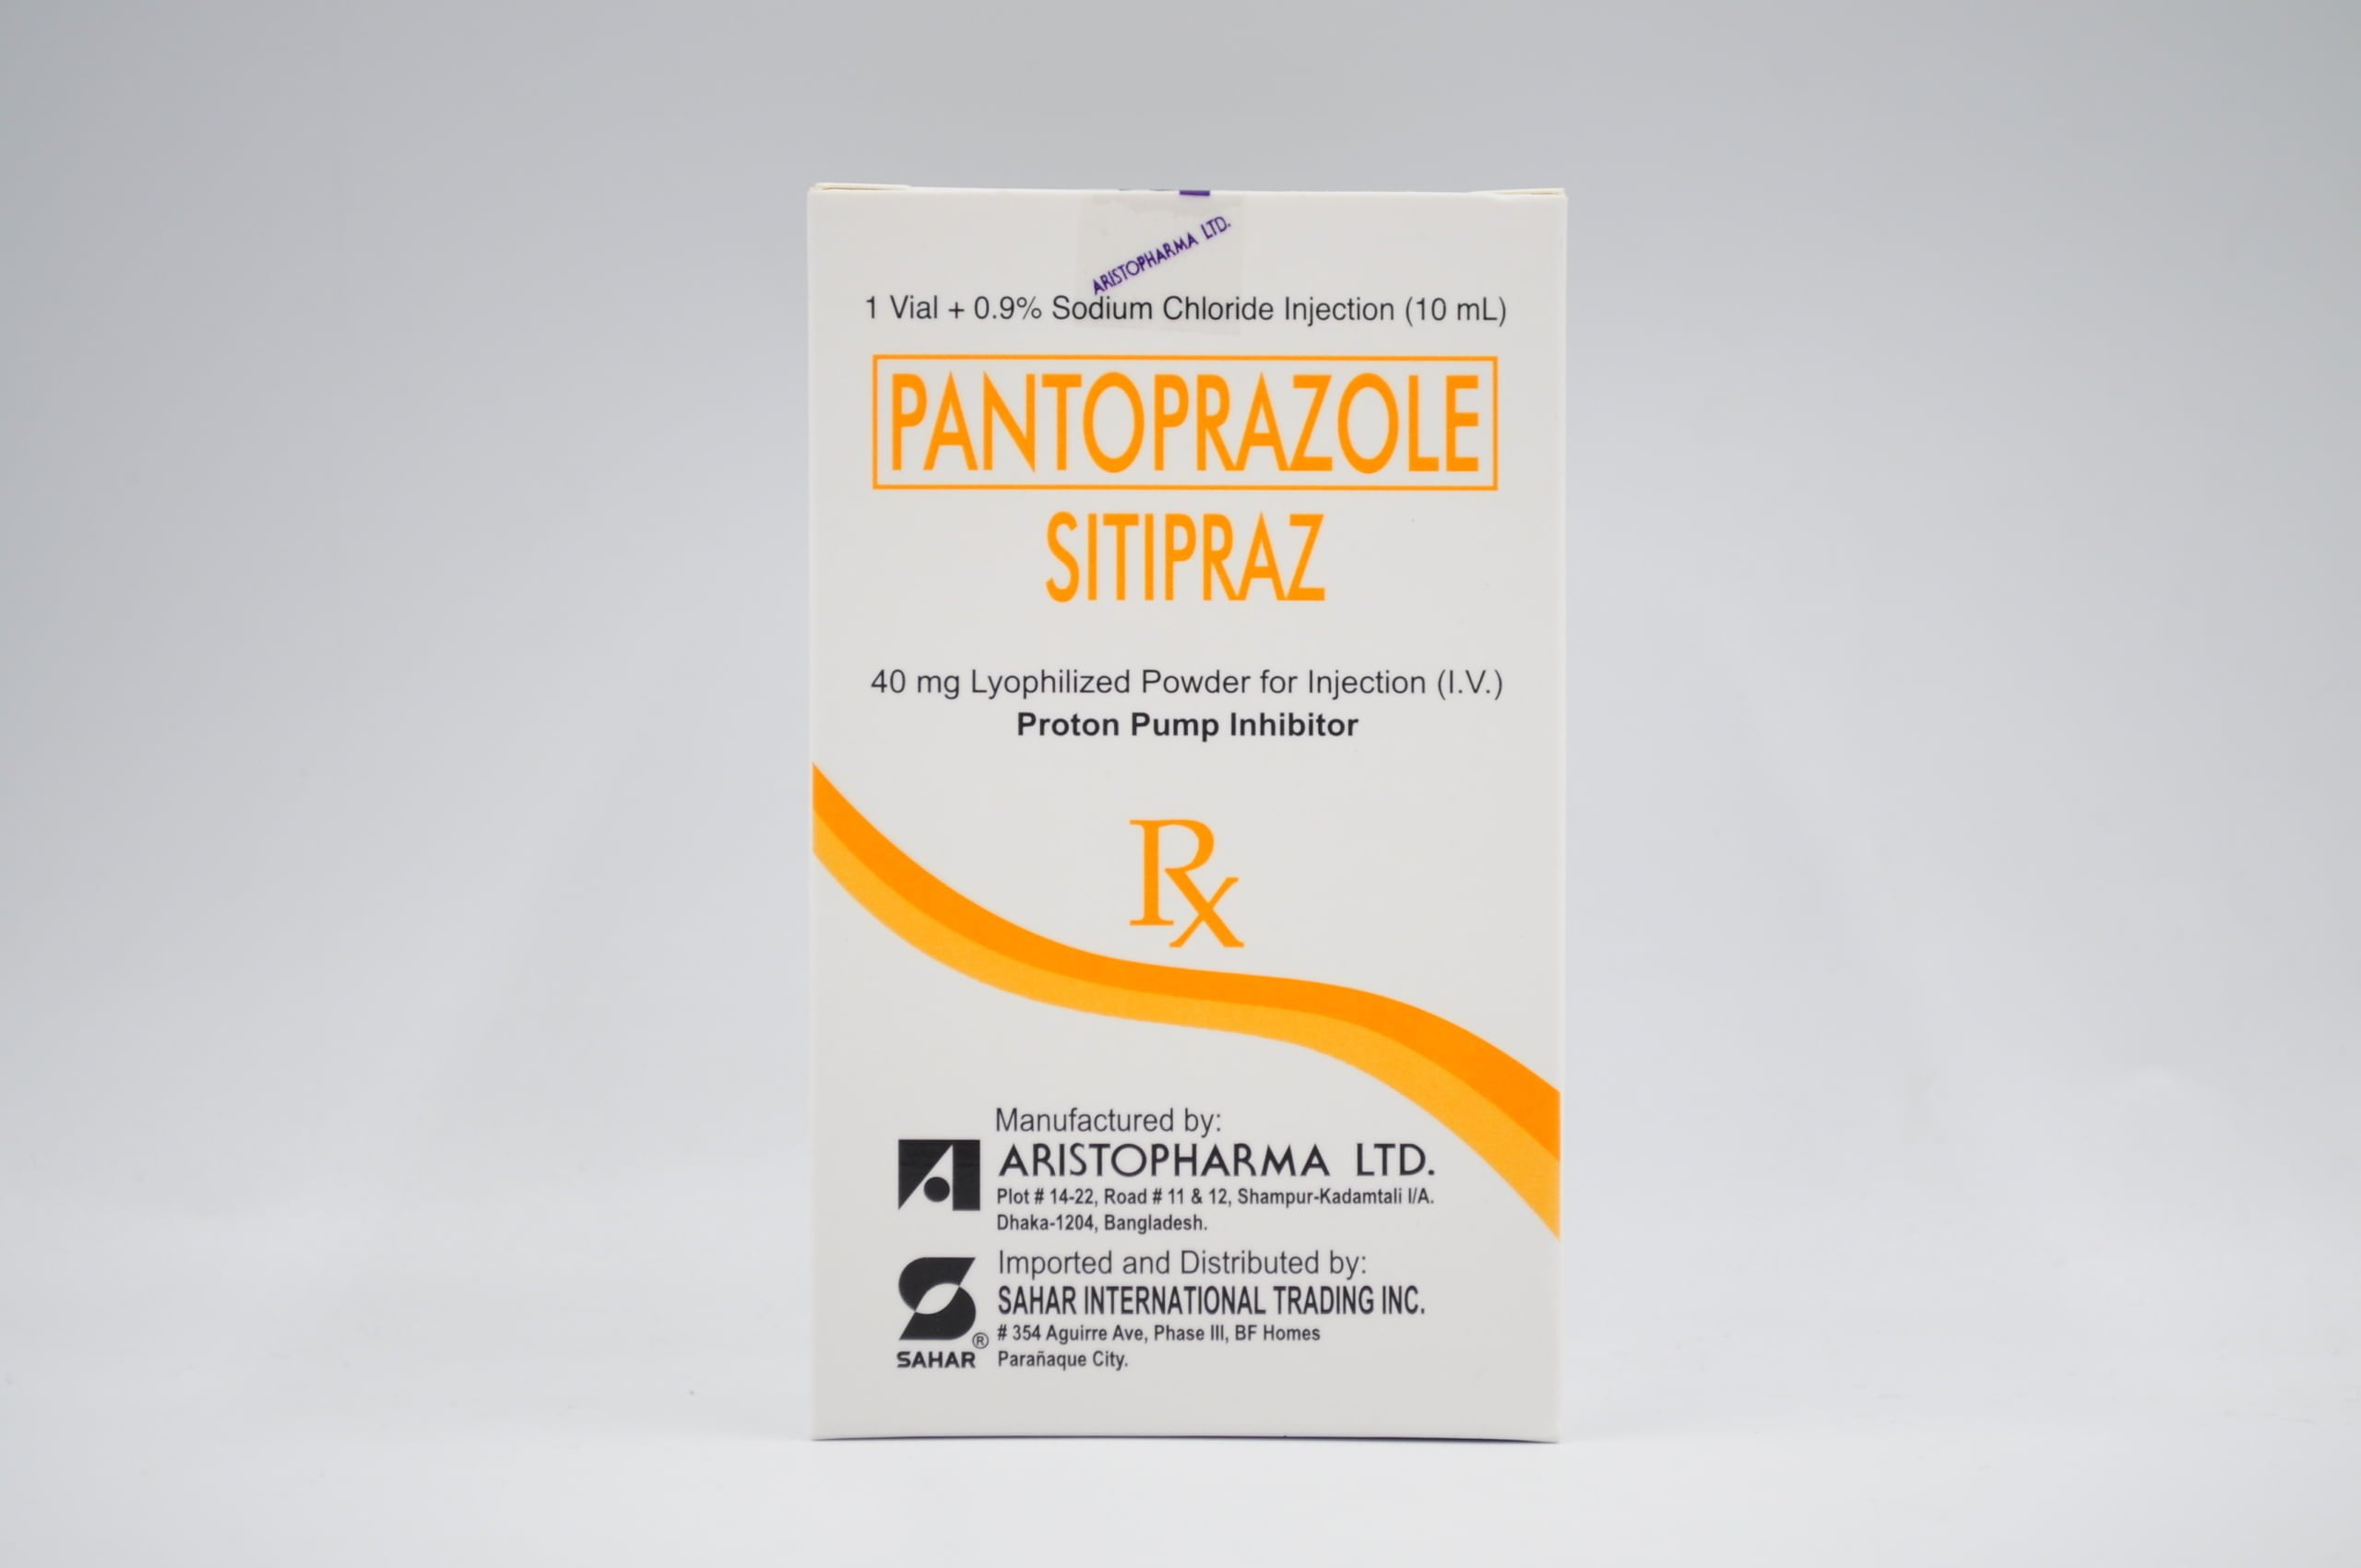 Pantoprazole (Proton Pump Inhibitor) Sitipraz